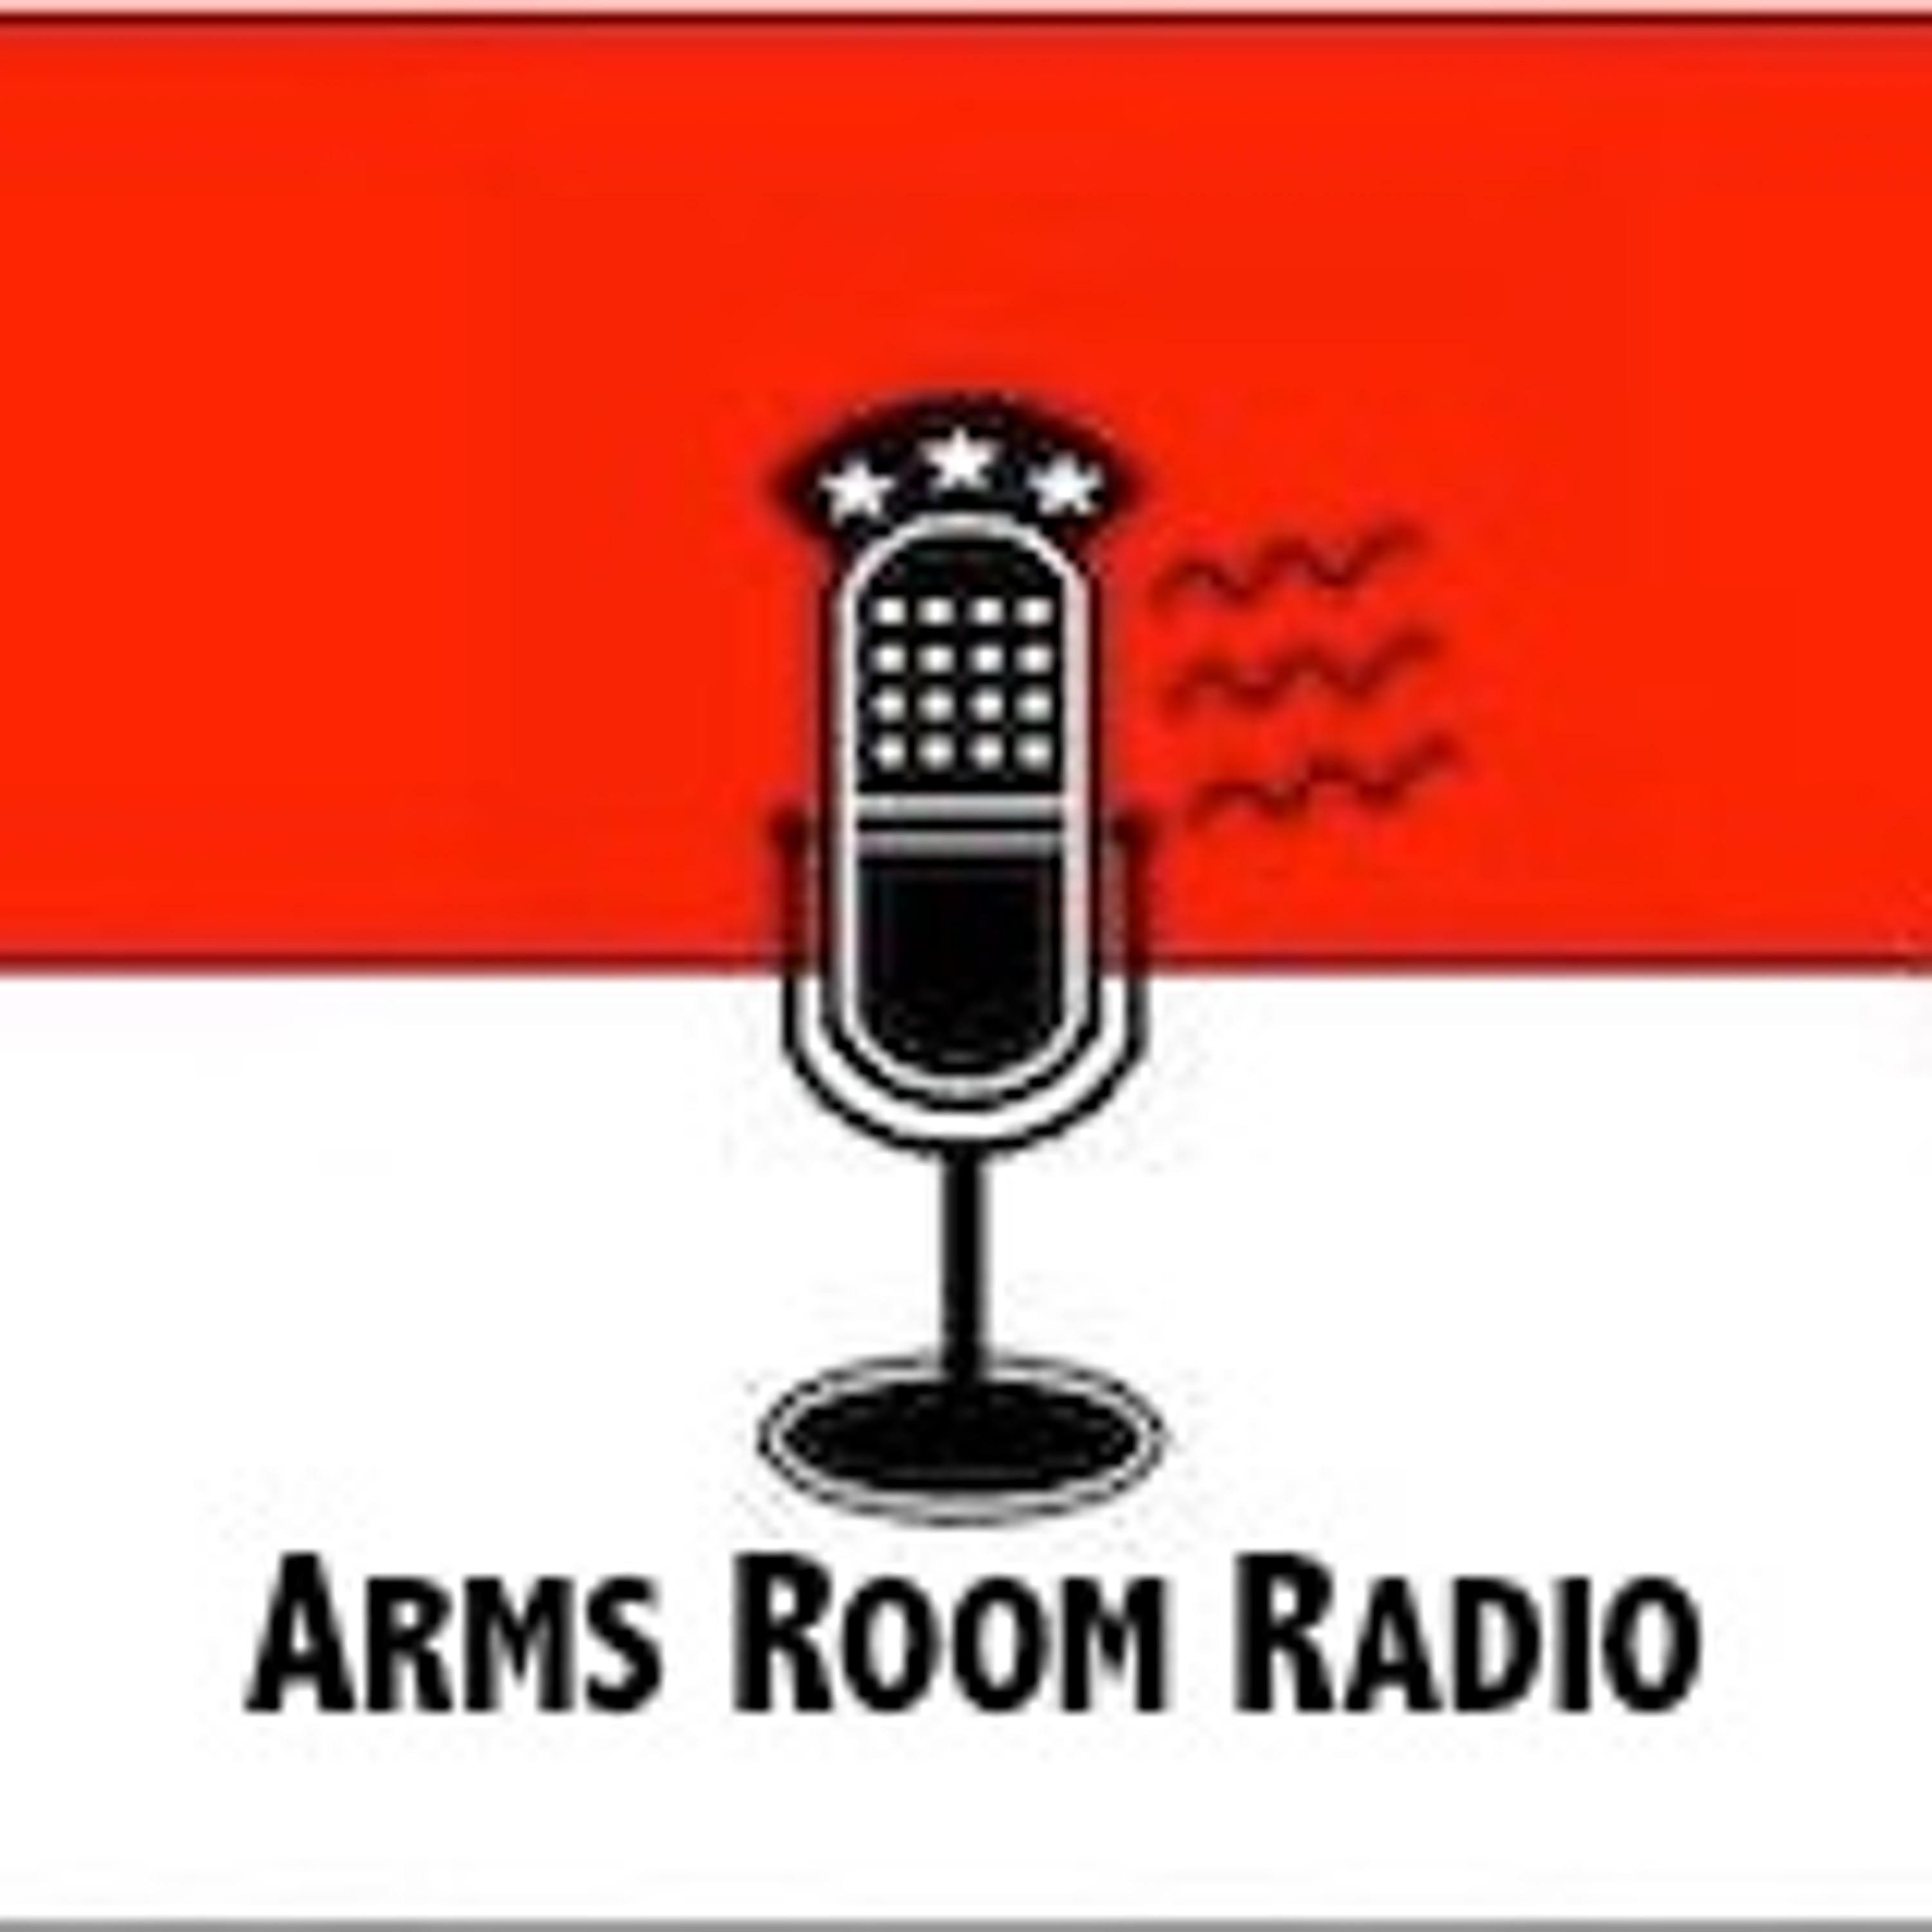 ArmsRoomRadio 01.19.19 Proposed New Gun Legislation